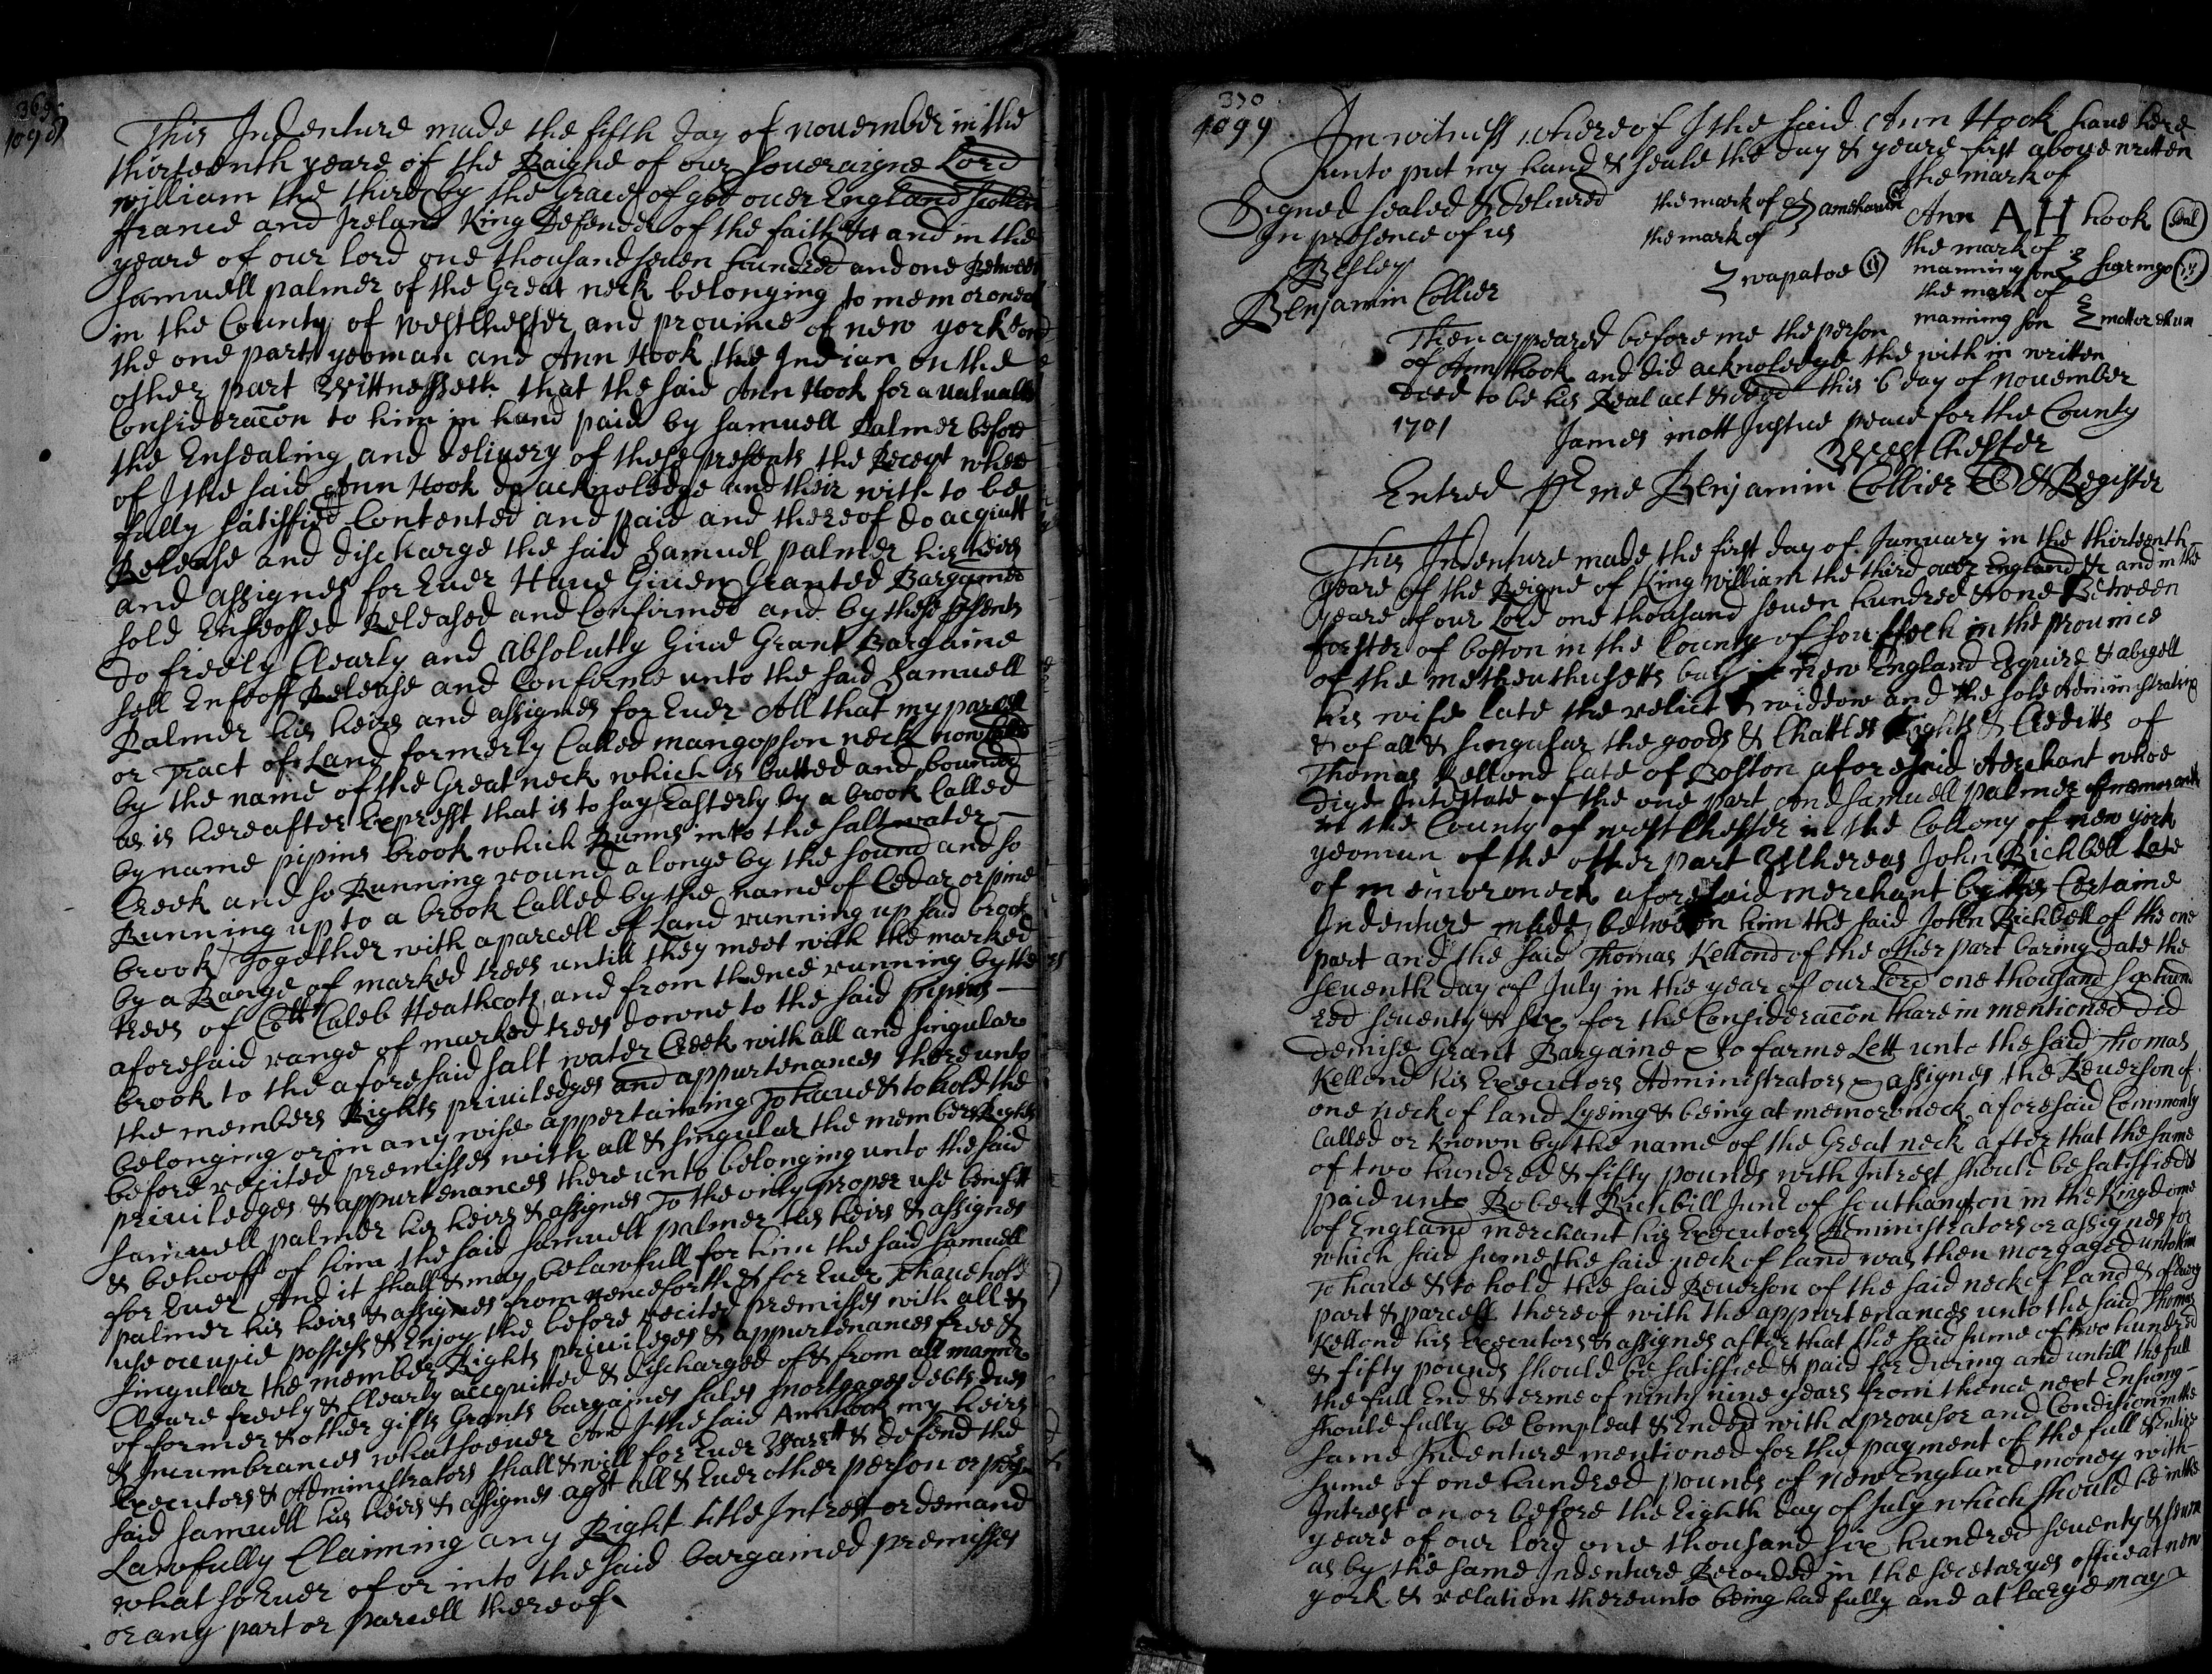 1701 - Deed from Ann Hook to Samuell Palmer (from original book)